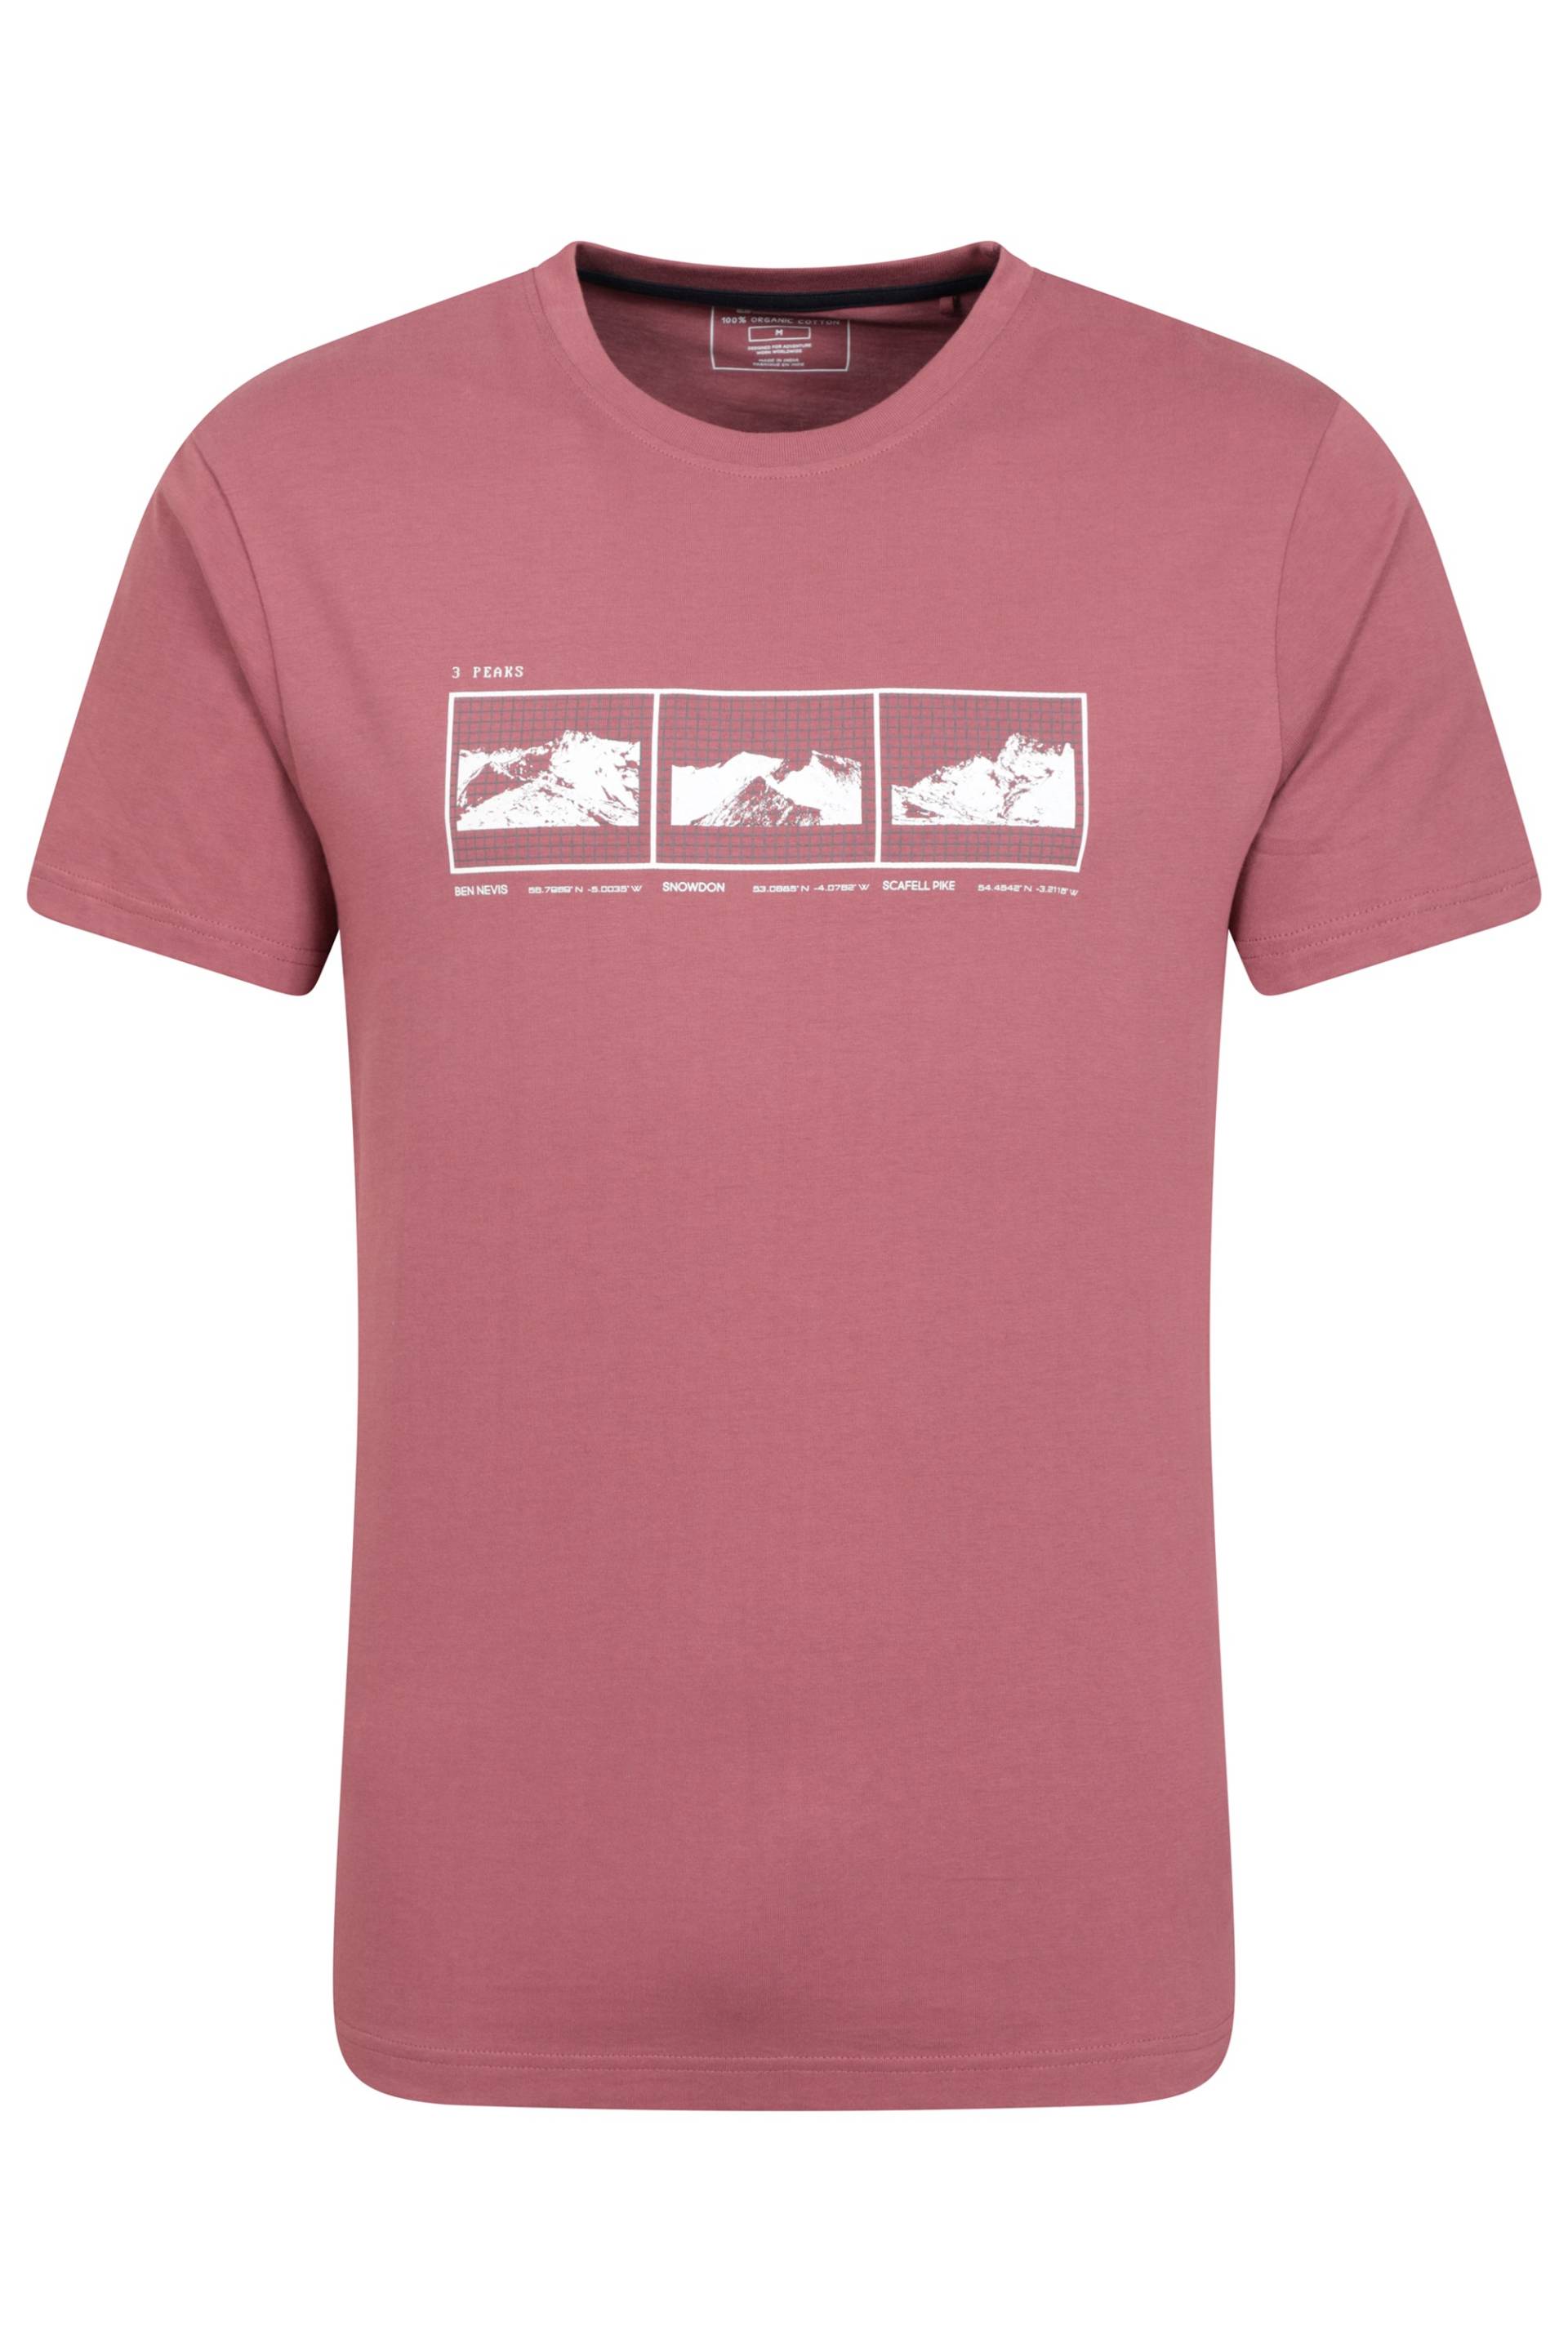 3 Peaks Herren Bio-Baumwoll T-Shirt - Burgunderrot von Mountain Warehouse